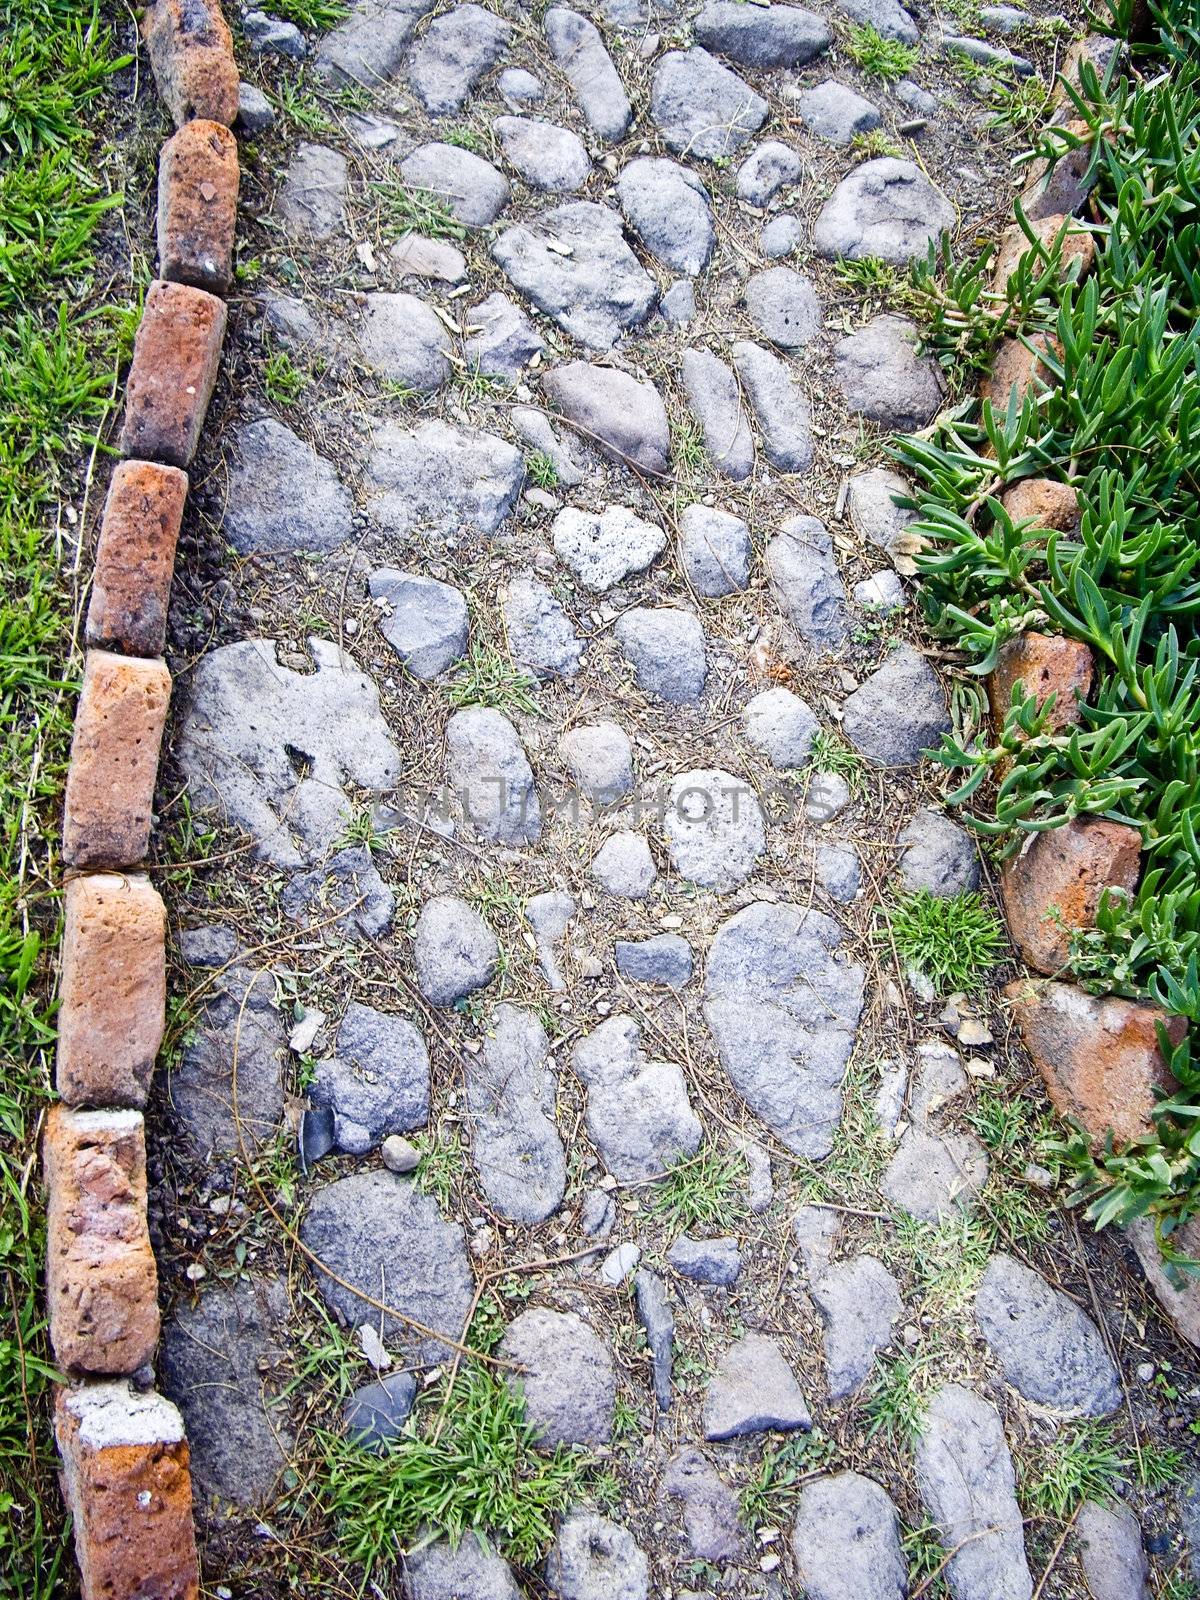 Path of decorative stones and brick